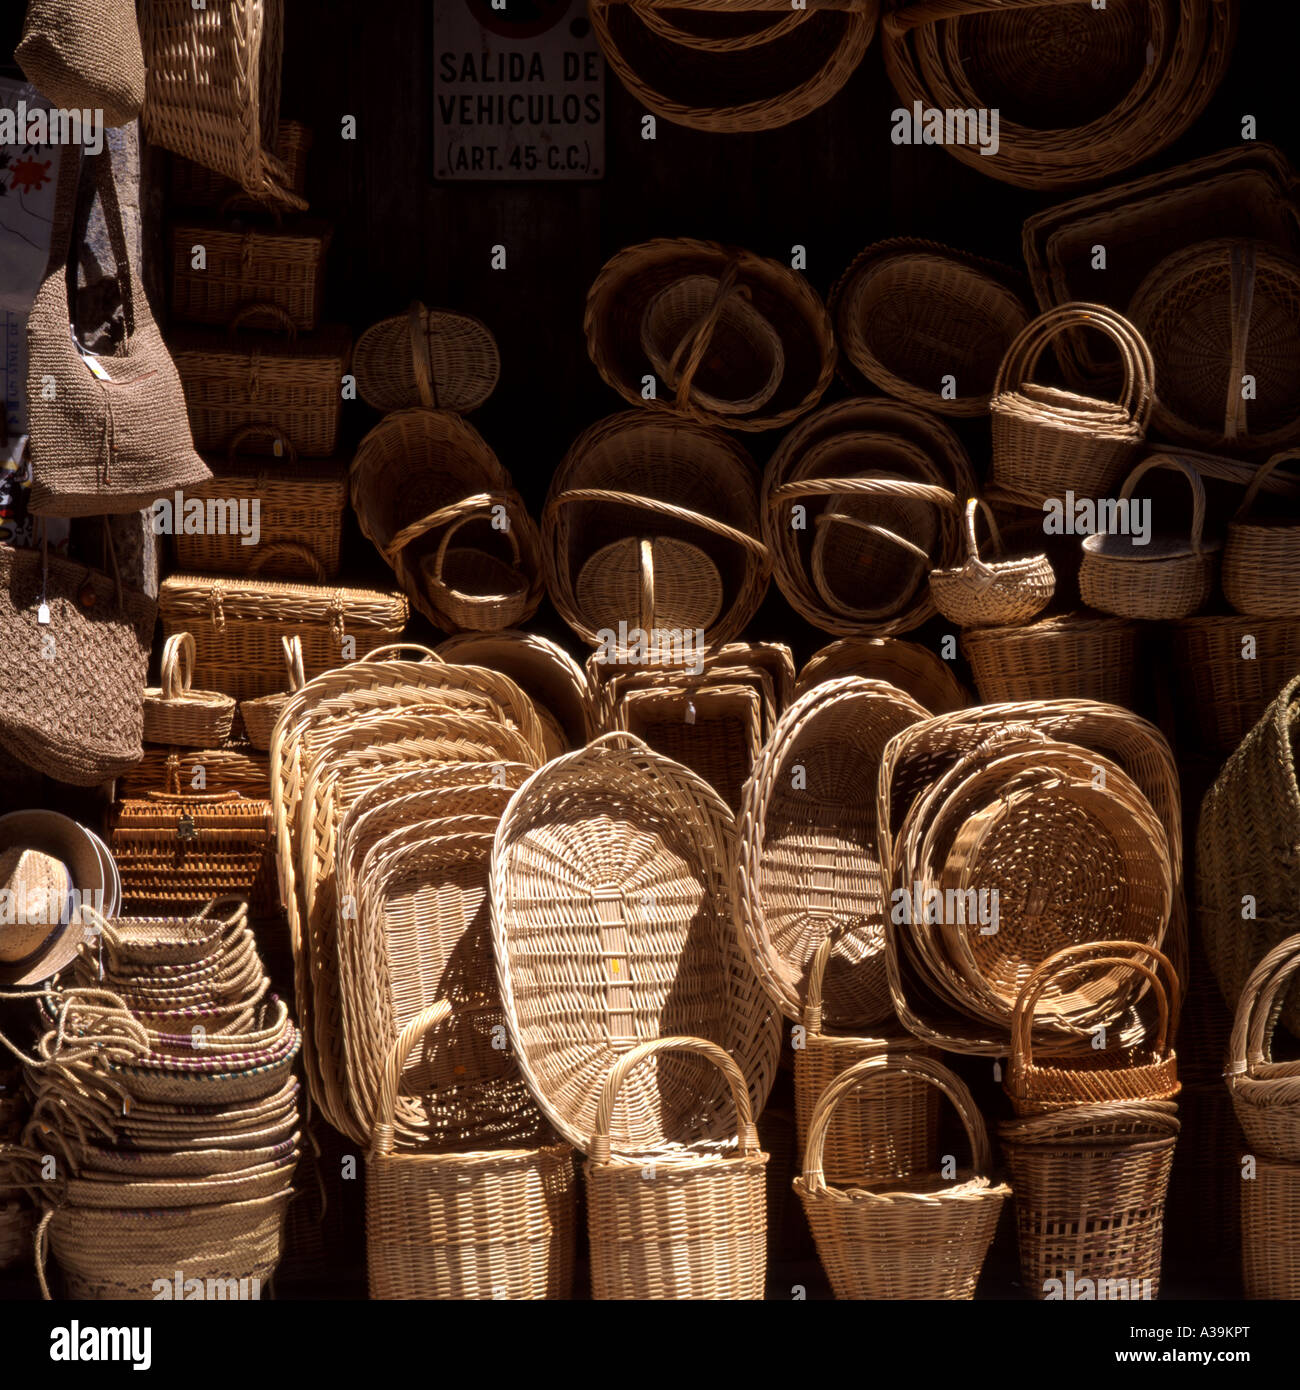 Baskets for sale Segovia Spain Stock Photo